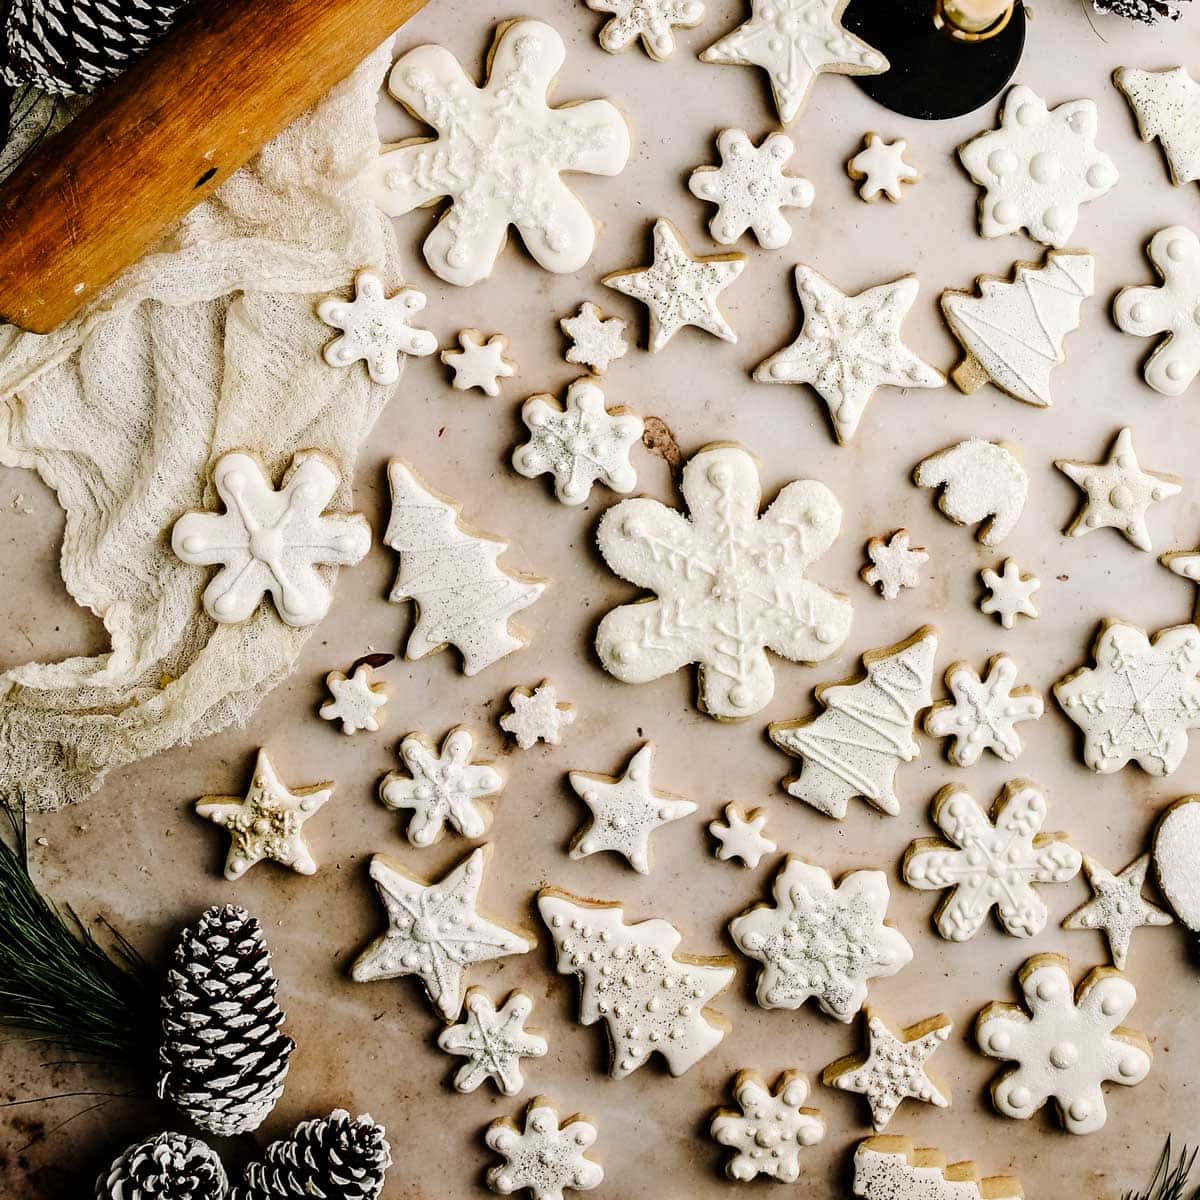 DIY Sugar Cookie Room Spray for a Festive Holiday Season